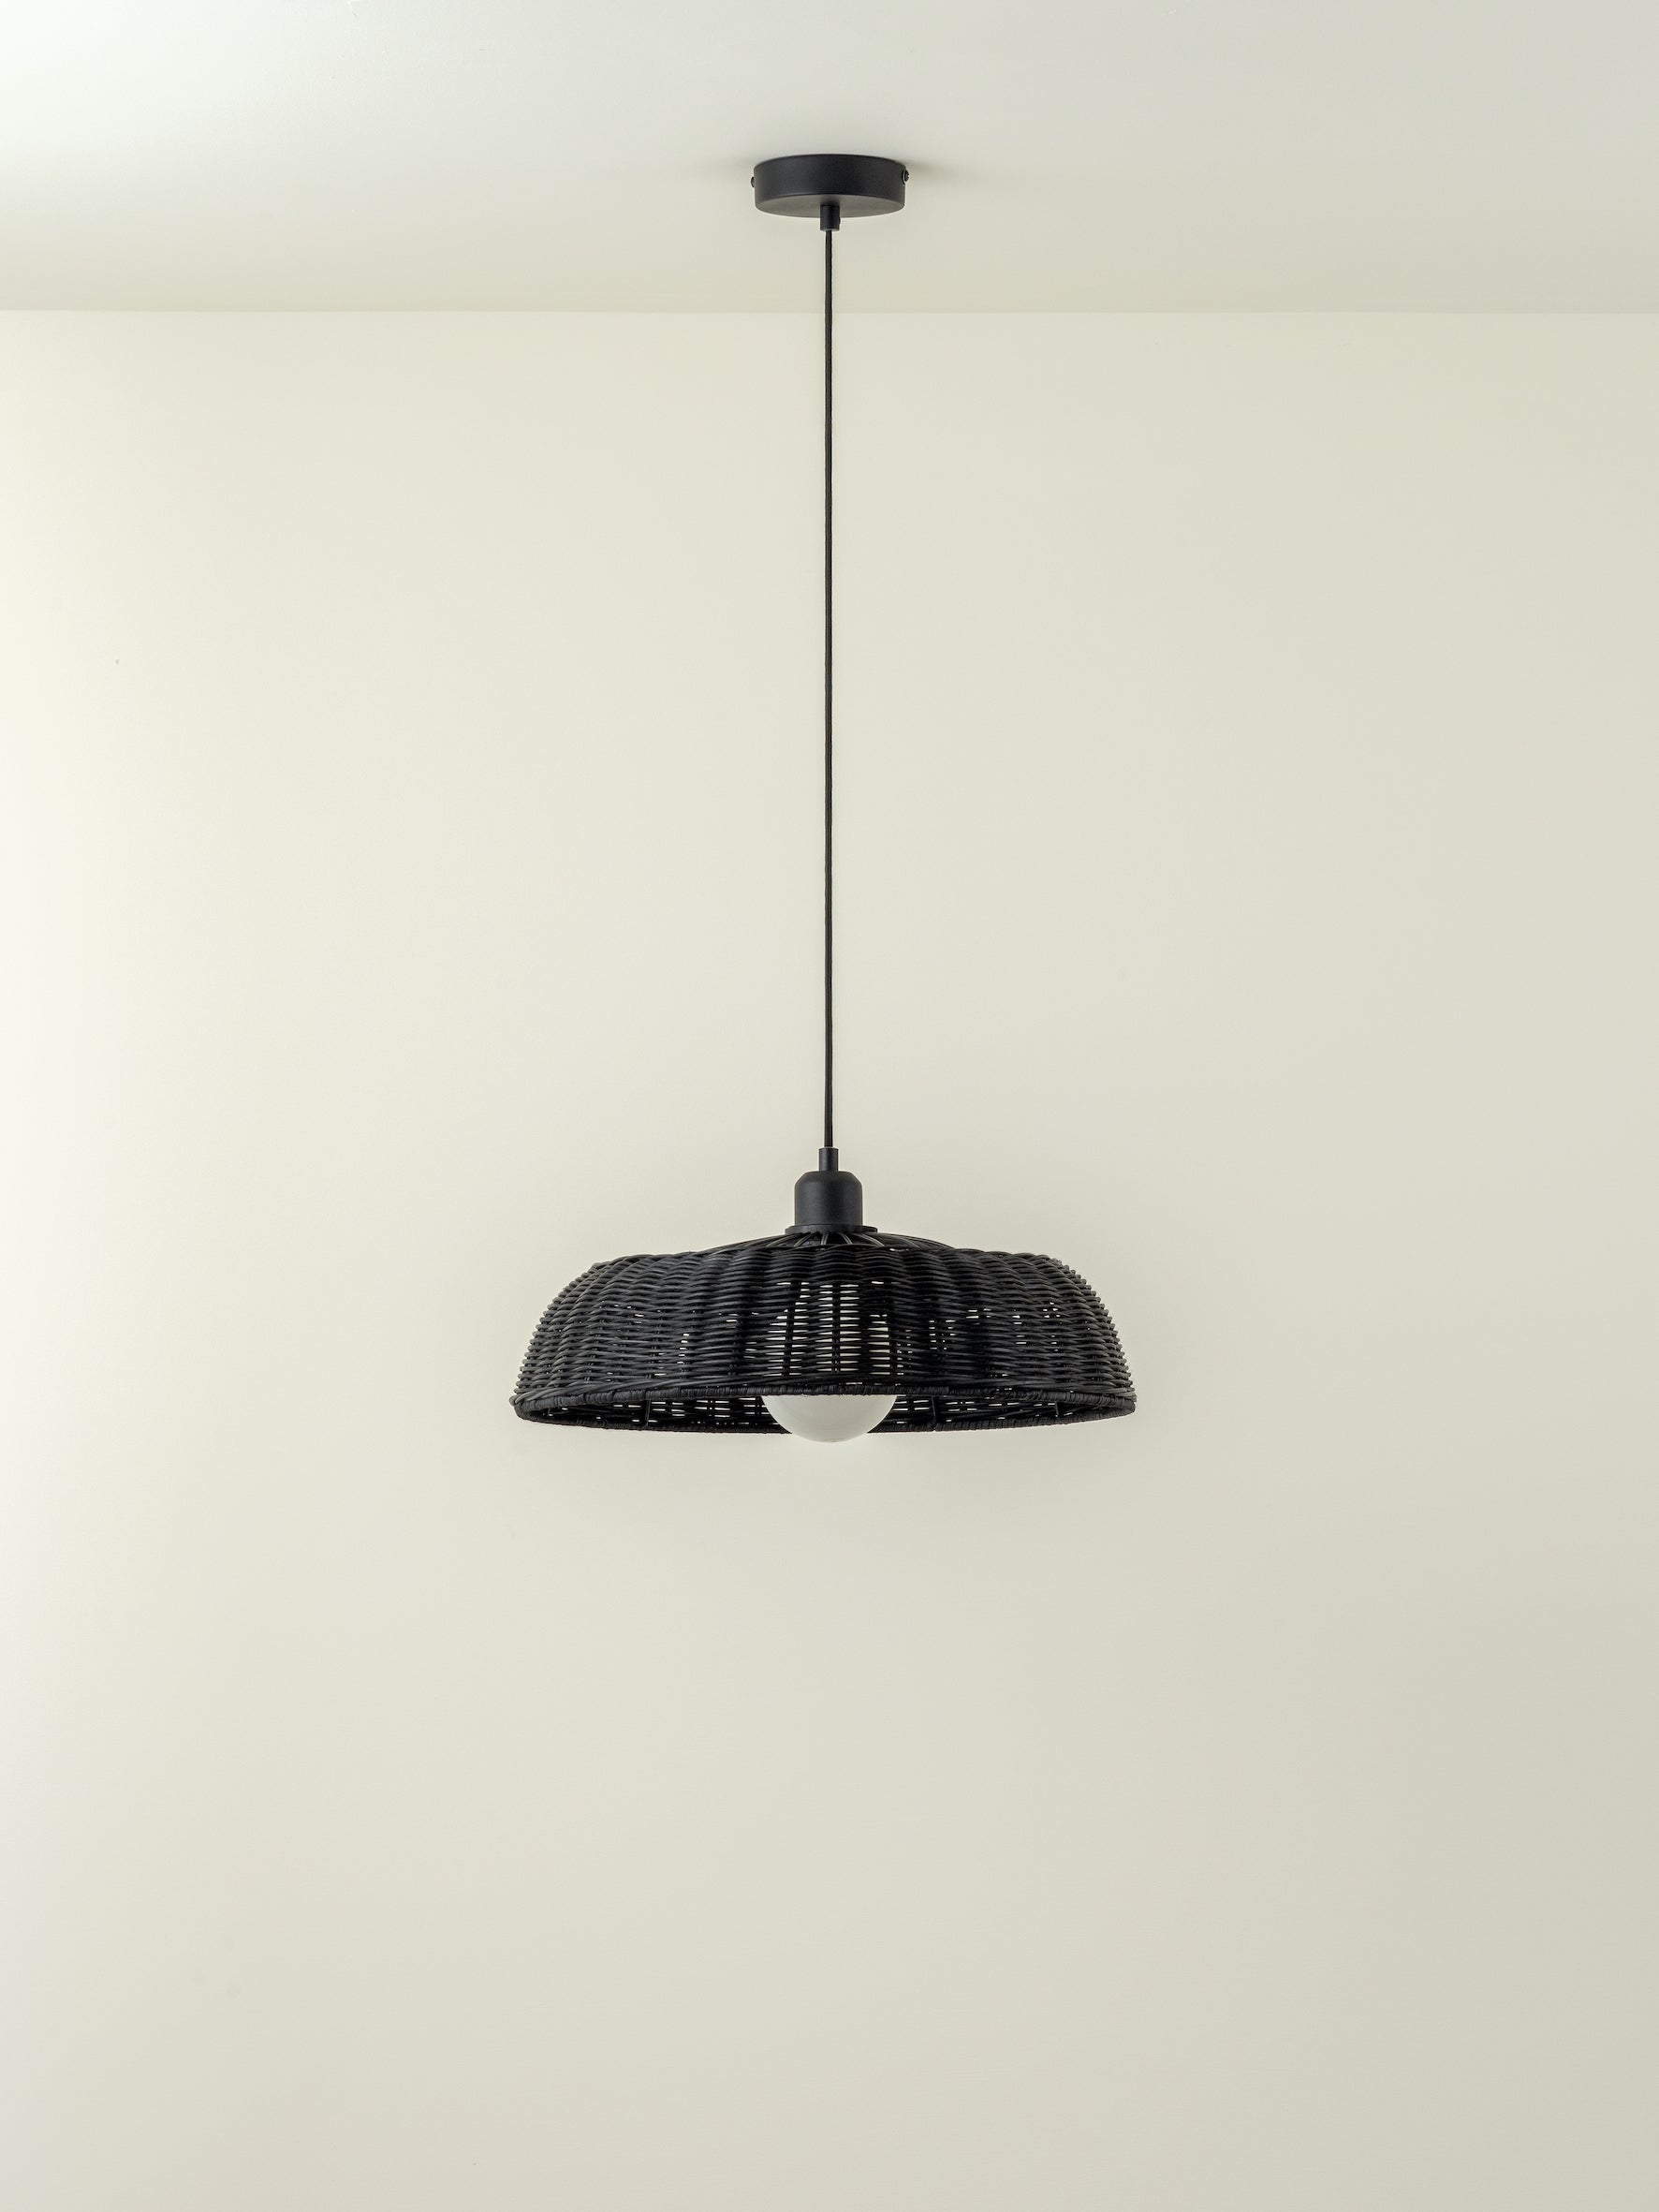 Capel - 1 light matt black drop cap lampholder kit | Ceiling Light | Lights & Lamps | UK | Modern Affordable Designer Lighting